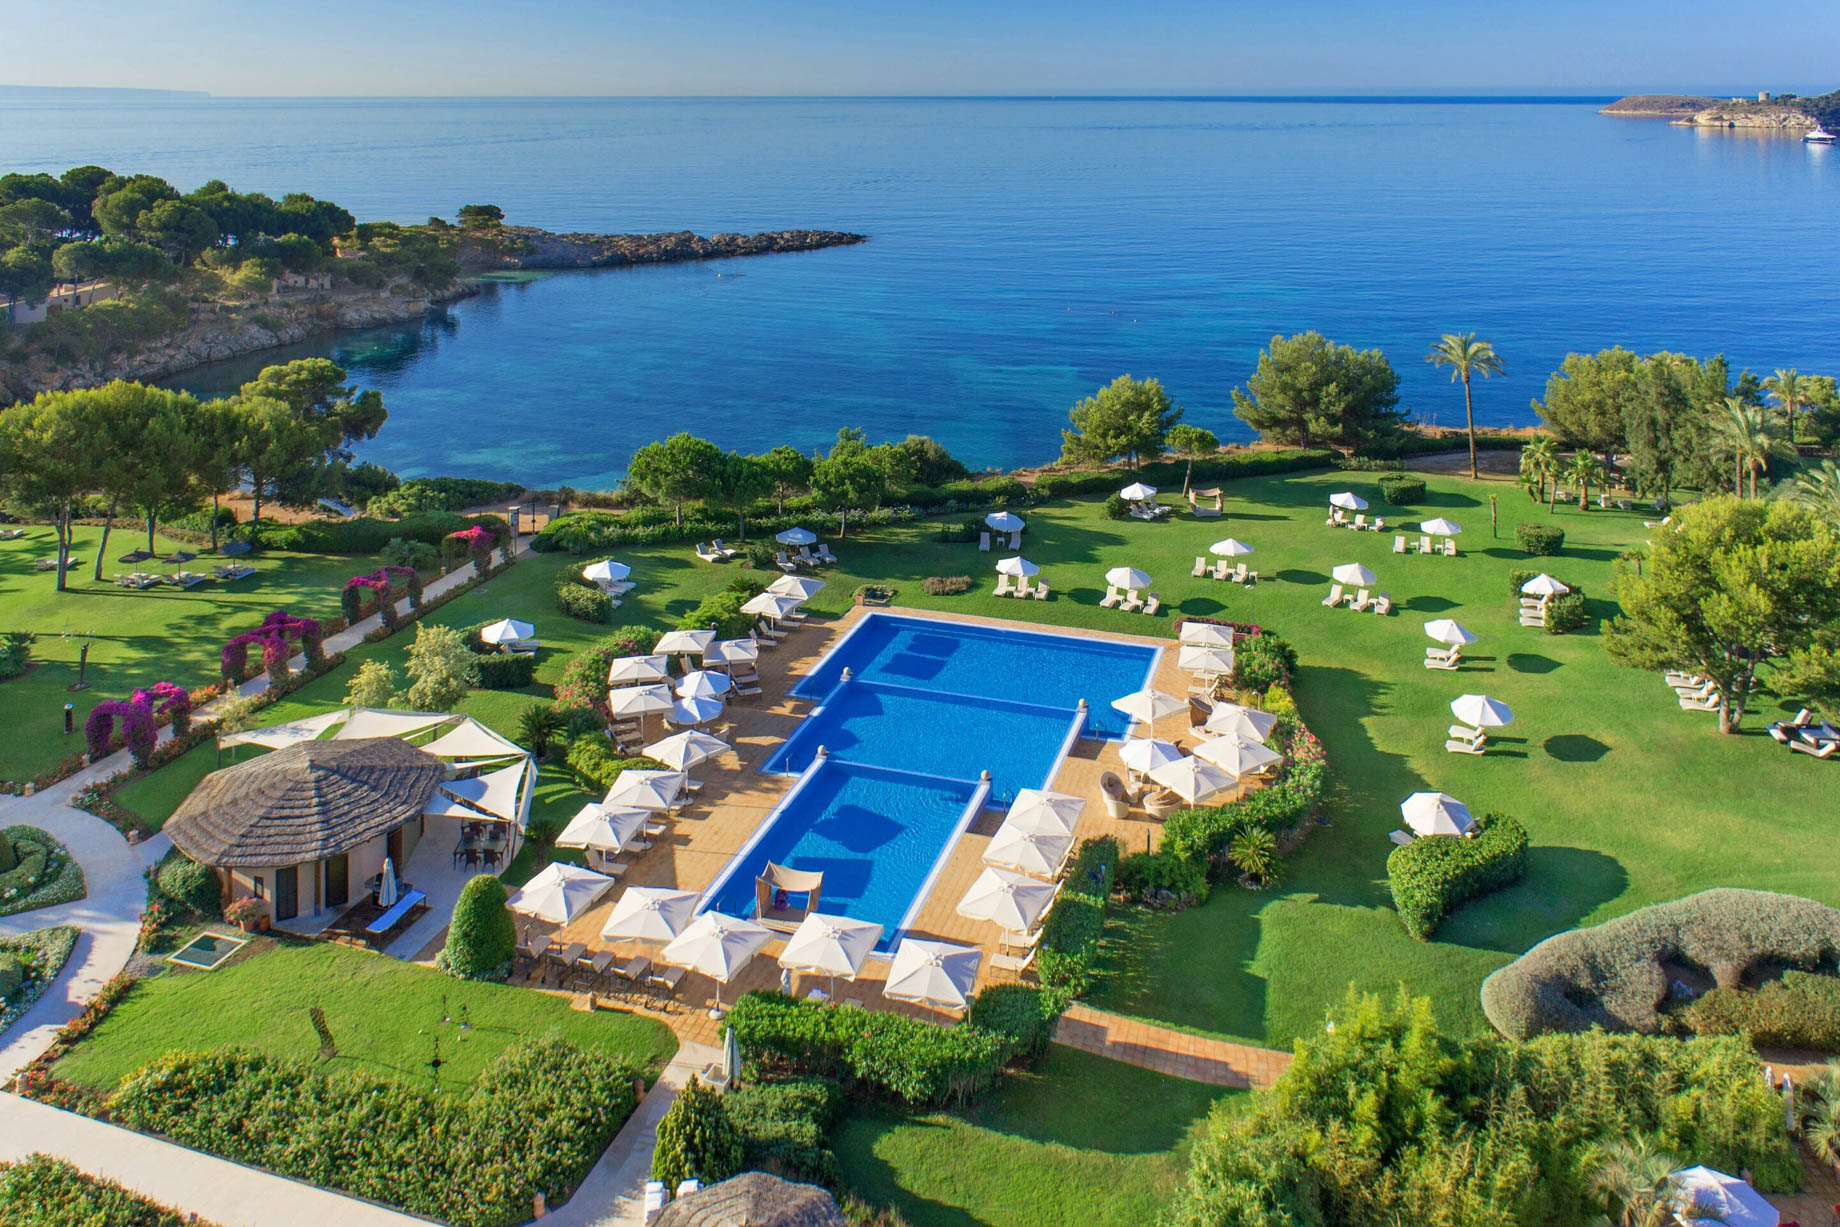 The St. Regis Mardavall Mallorca Resort – Palma de Mallorca, Spain – Resort Pool Aerial View